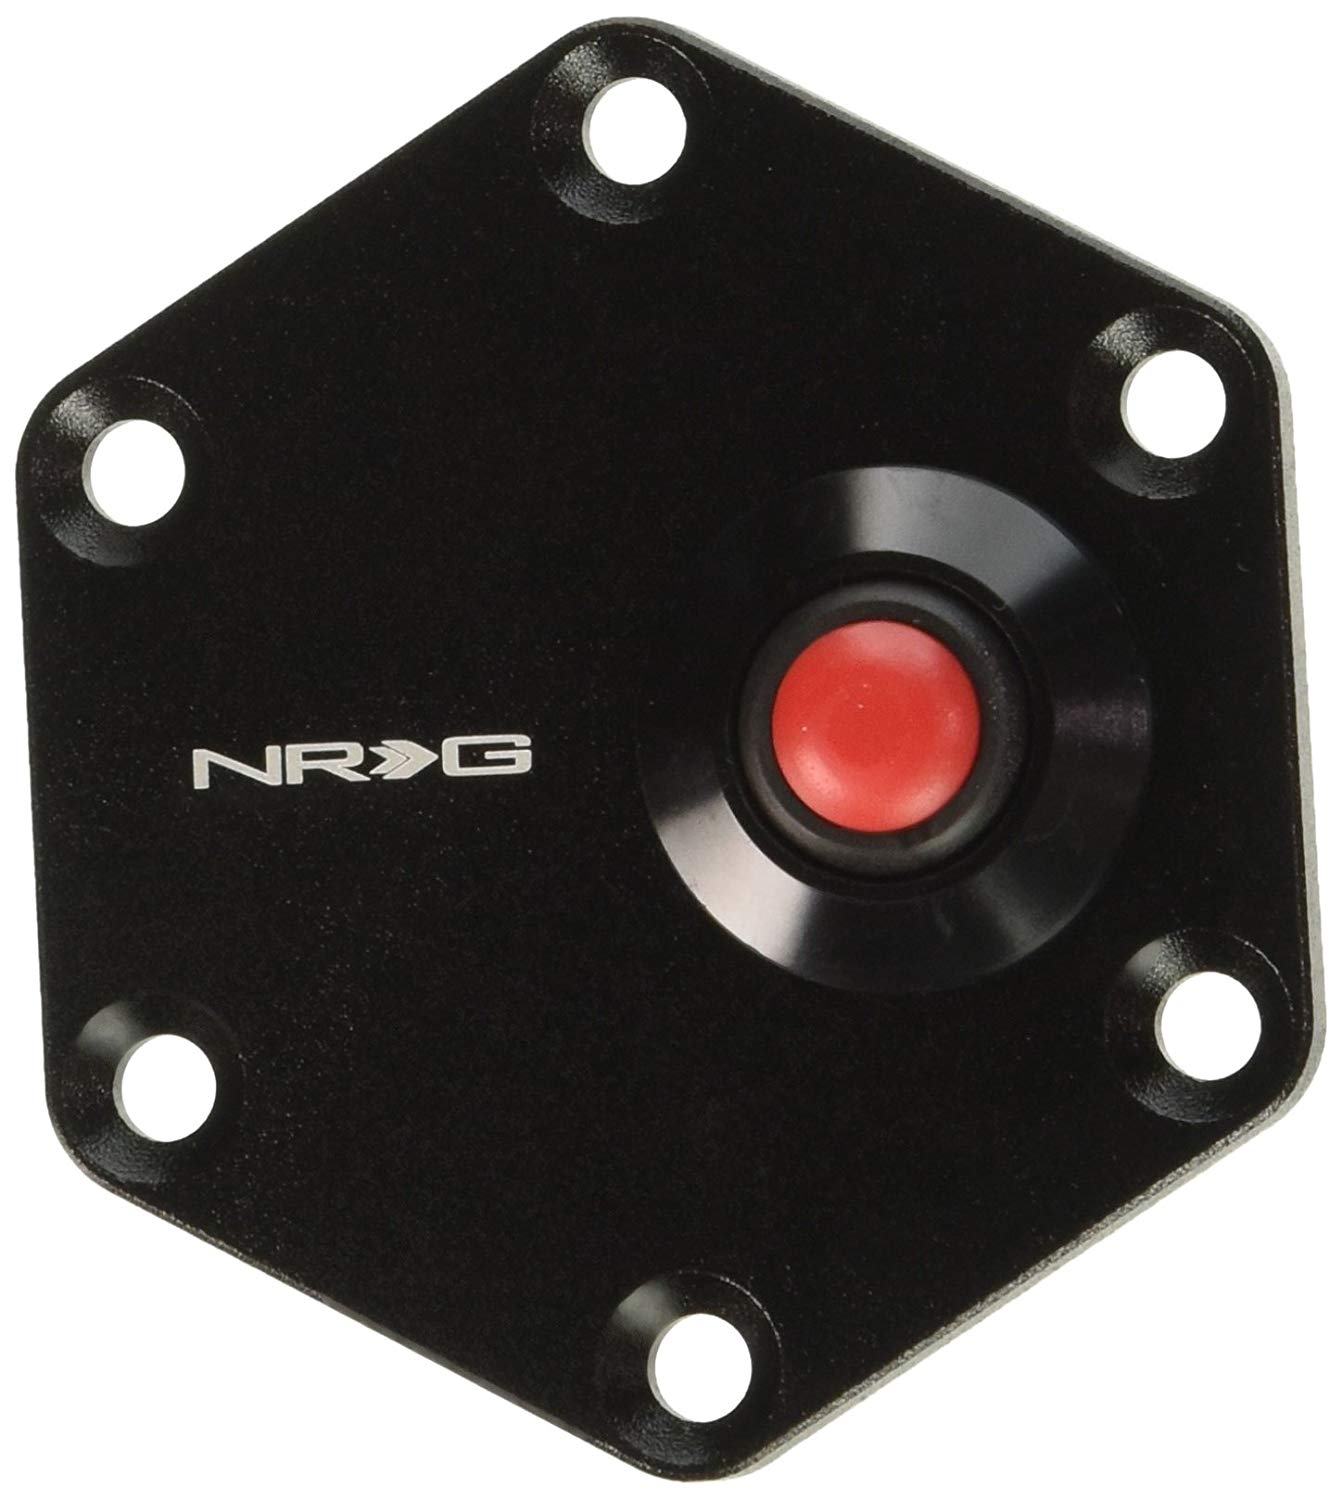 NRG Hexagnal Steering Wheel Ring w/ Horn Button - Black